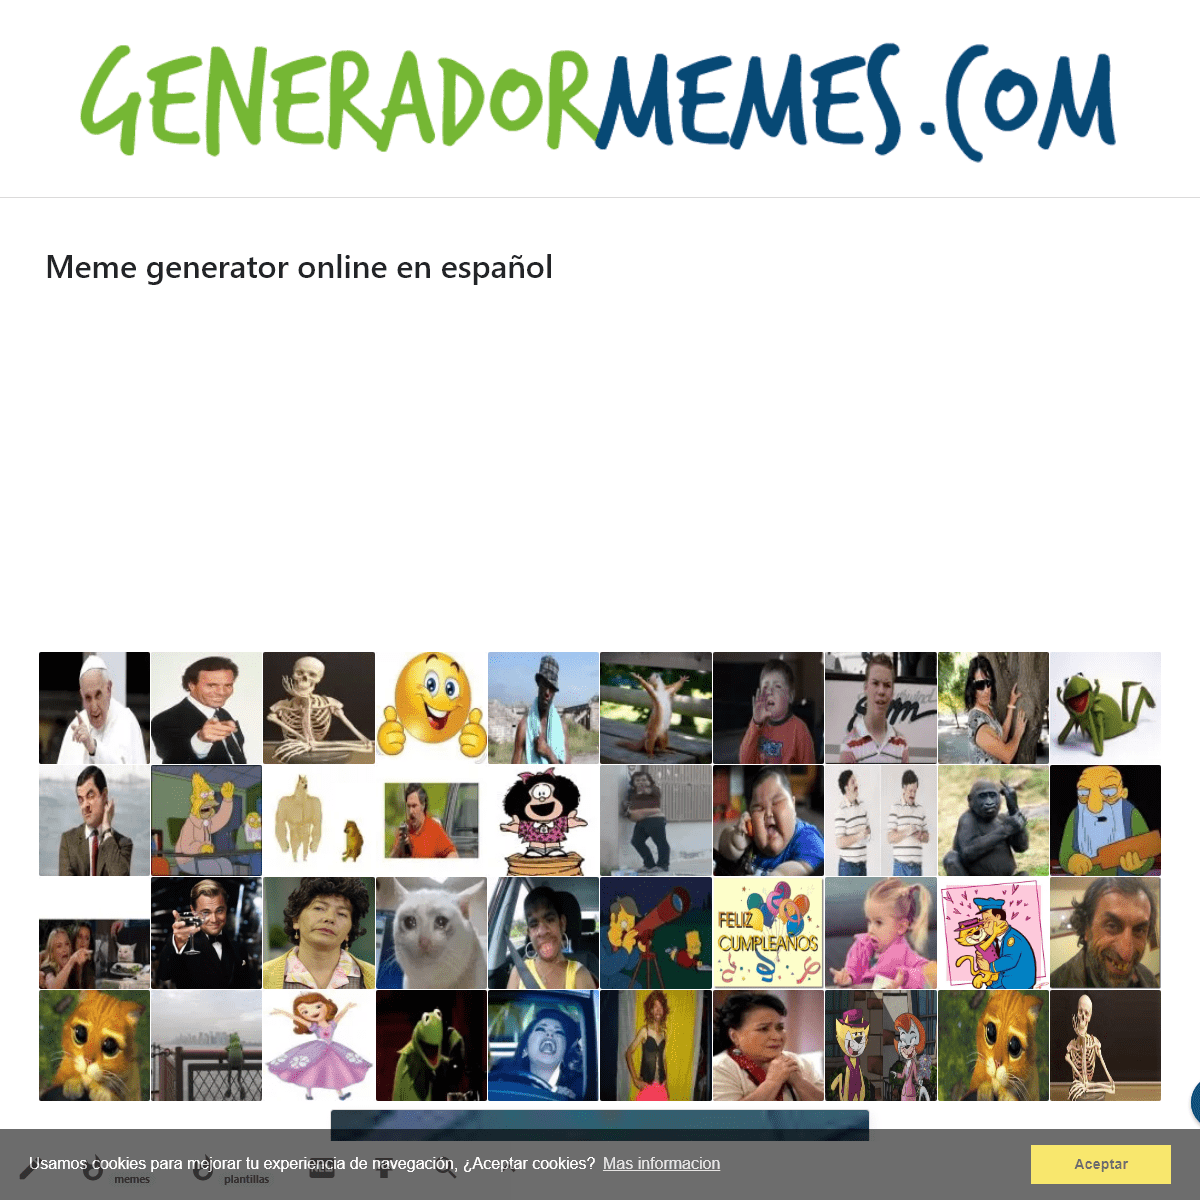 A complete backup of generadormemes.com